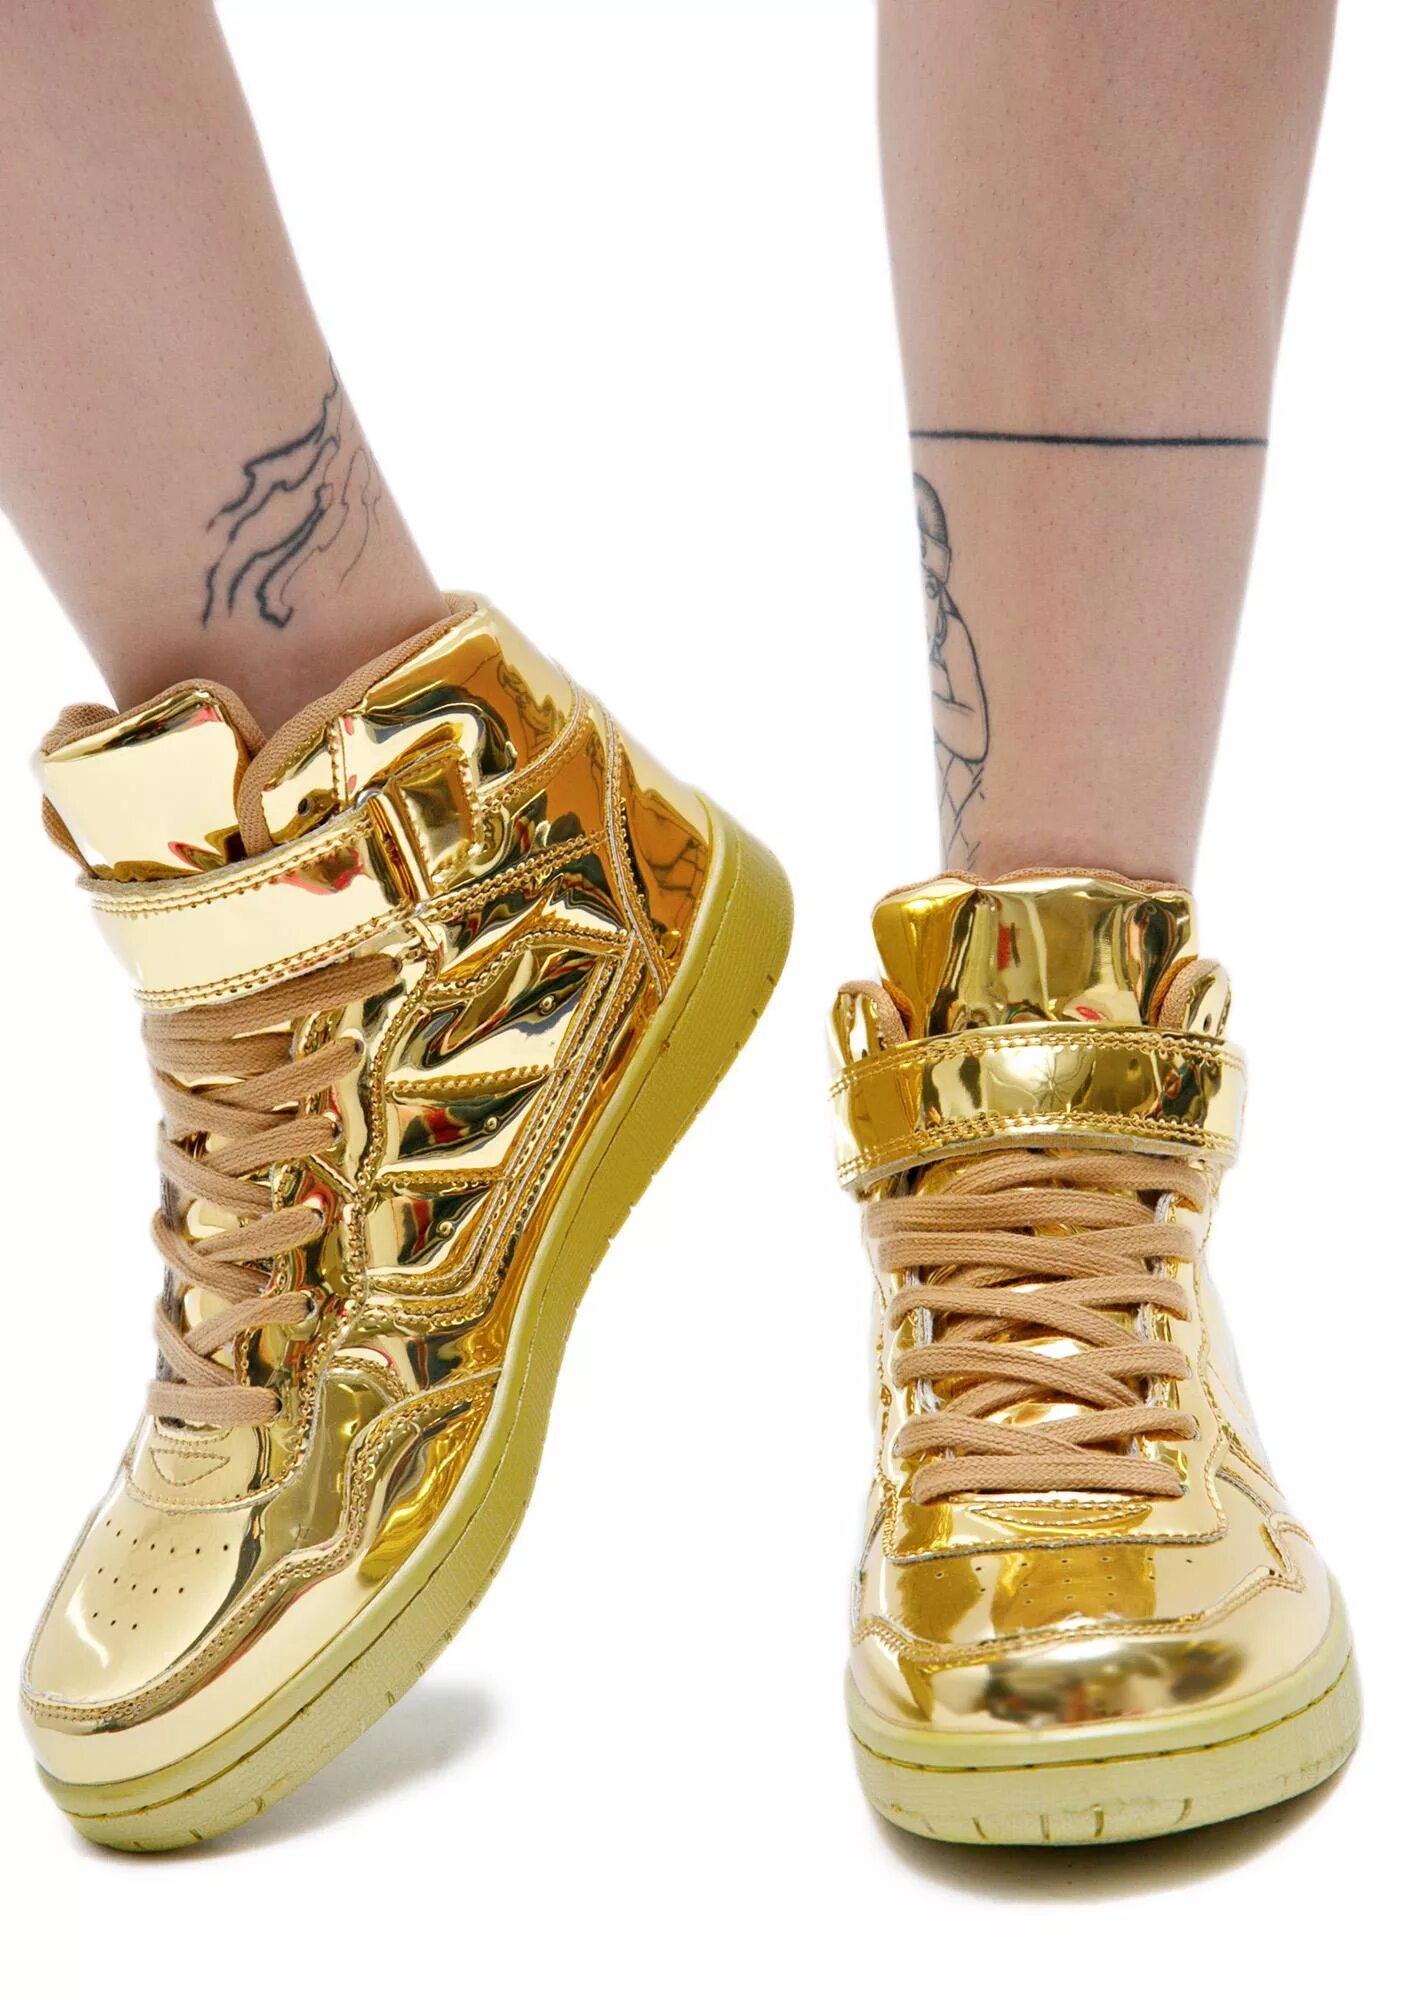 Хай голд. Buscemi 100 mm High Top Gold. Gold Diggers обувь. Shoes Buscemi Gold. Gold Diggers обувь кроссовки.